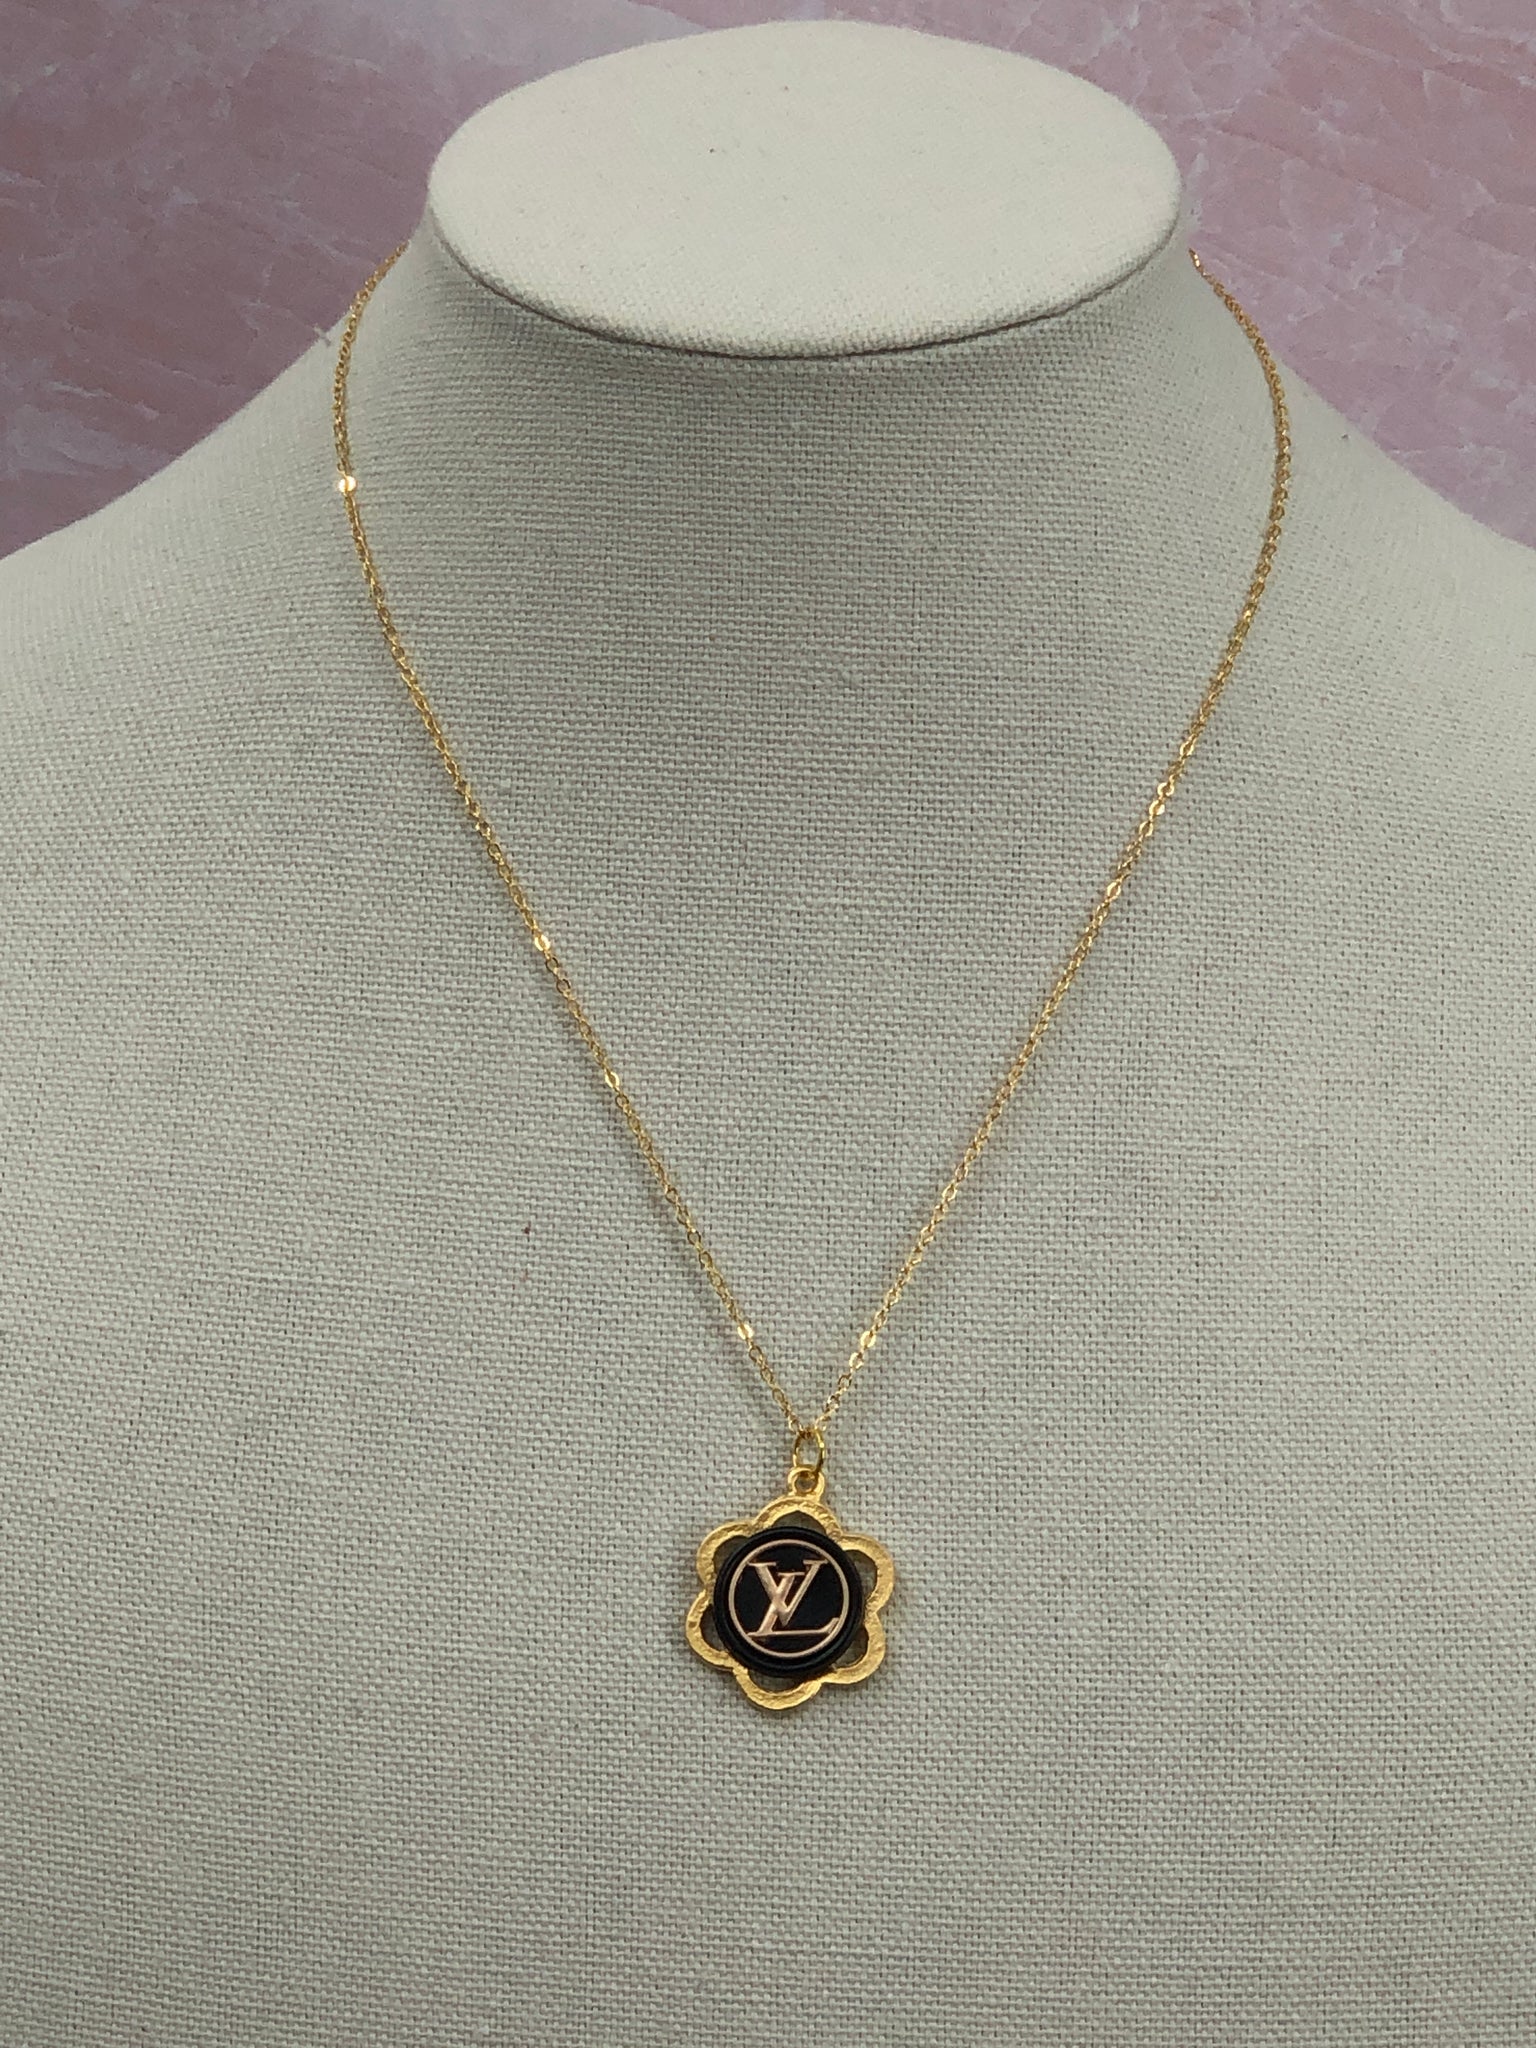 Repurposed rare Louis Vuitton gold LV charm necklace